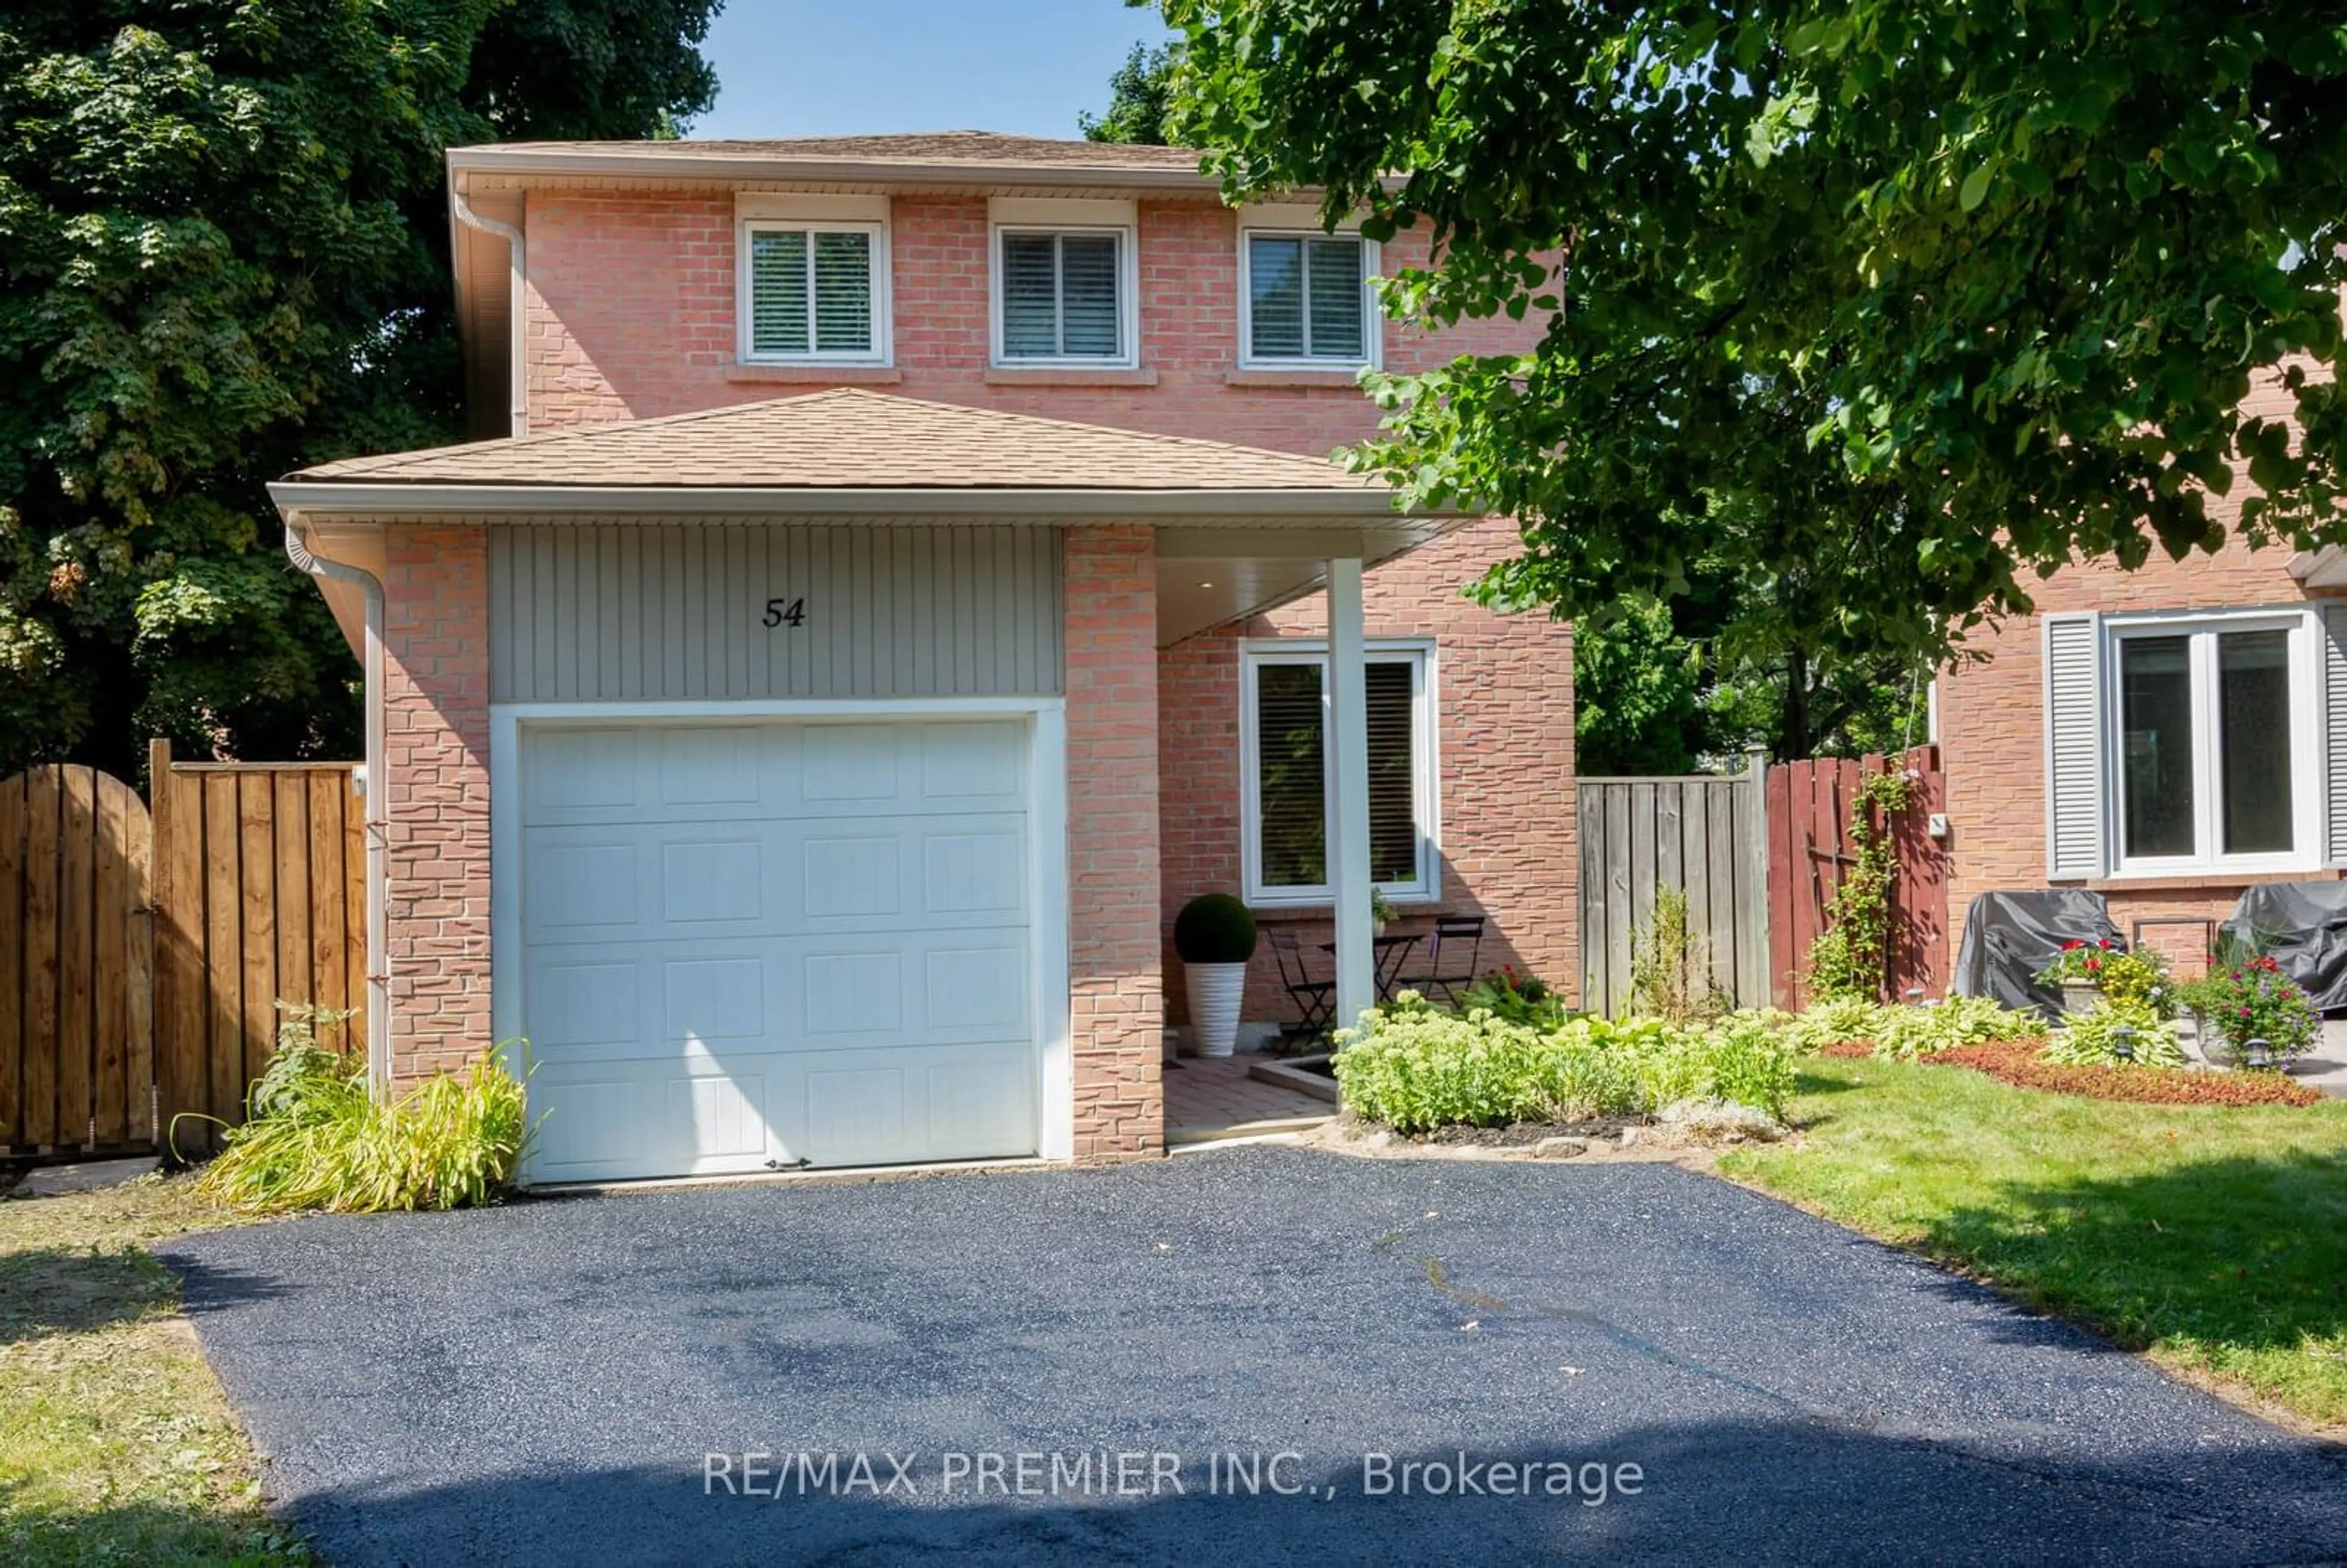 Home with brick exterior material for 54 Berkshire Sq, Brampton Ontario L6Z 1N4